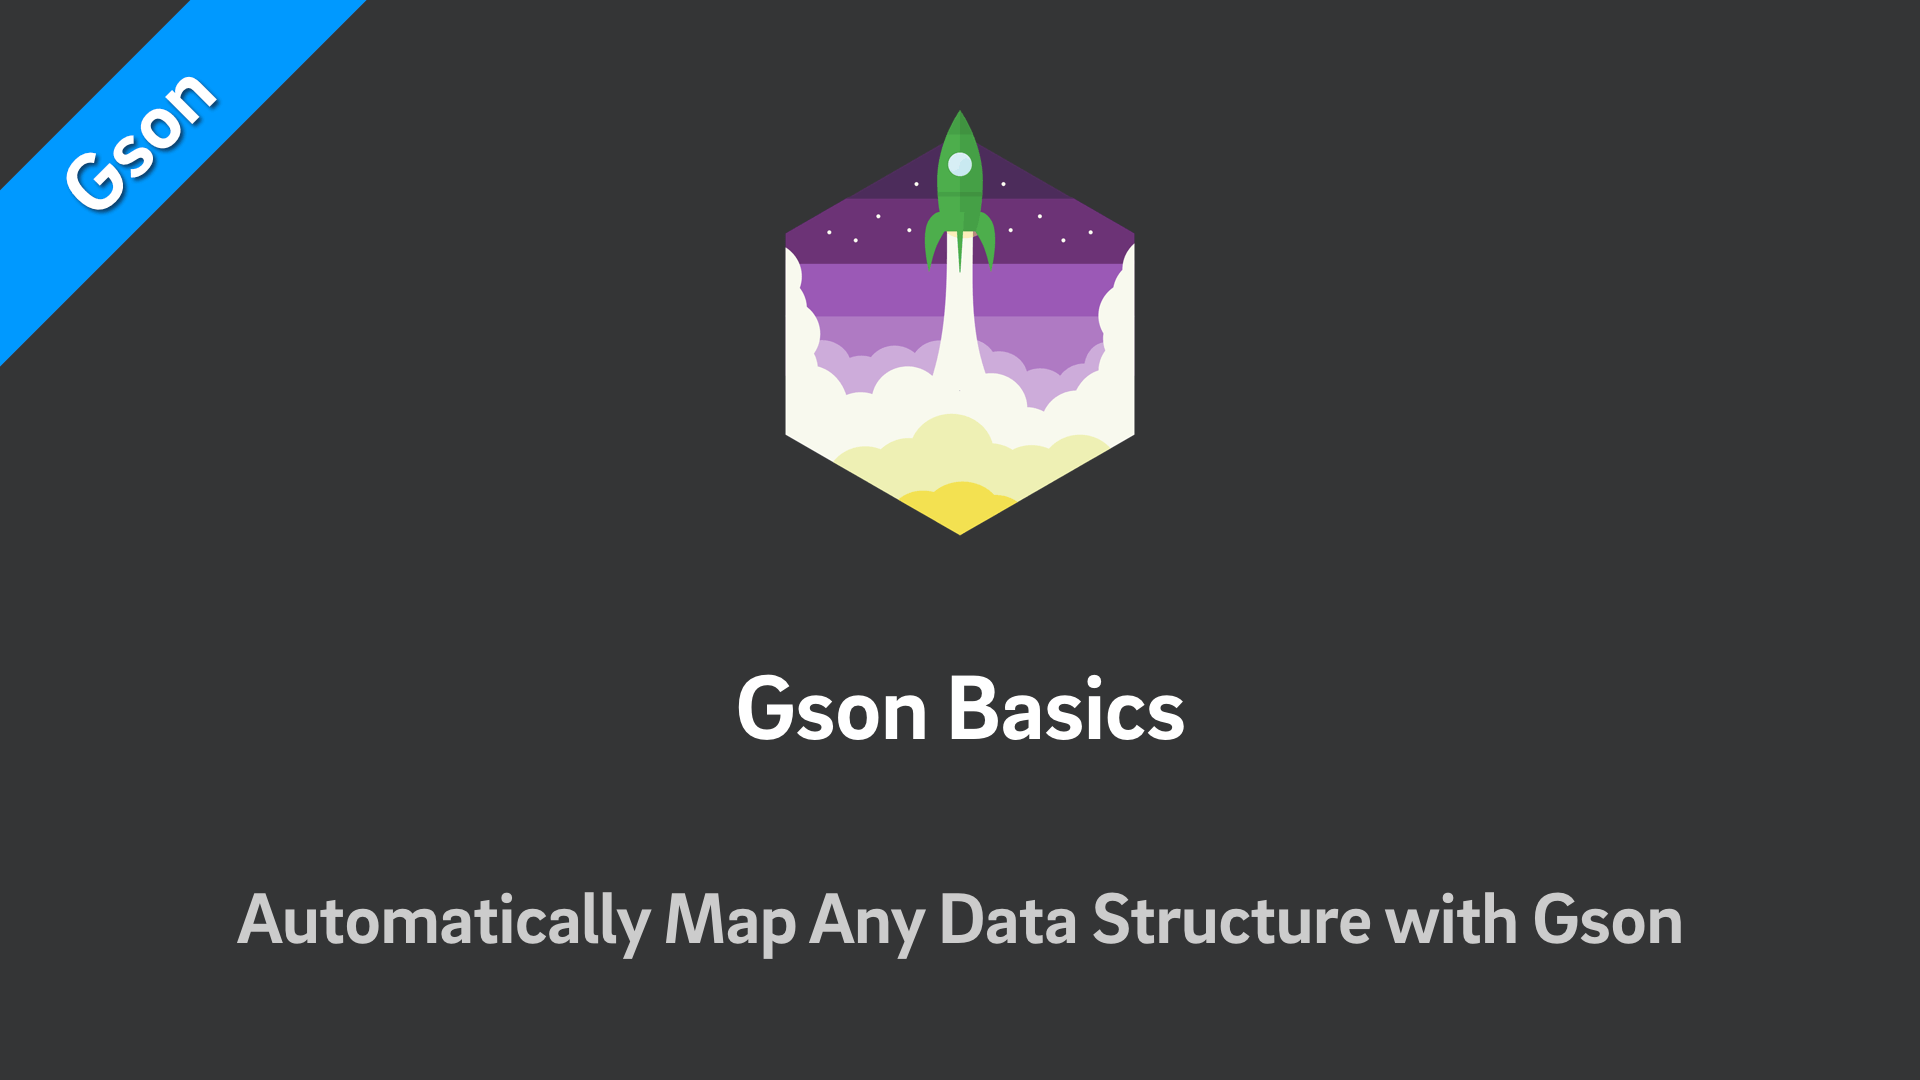 Gson Basics